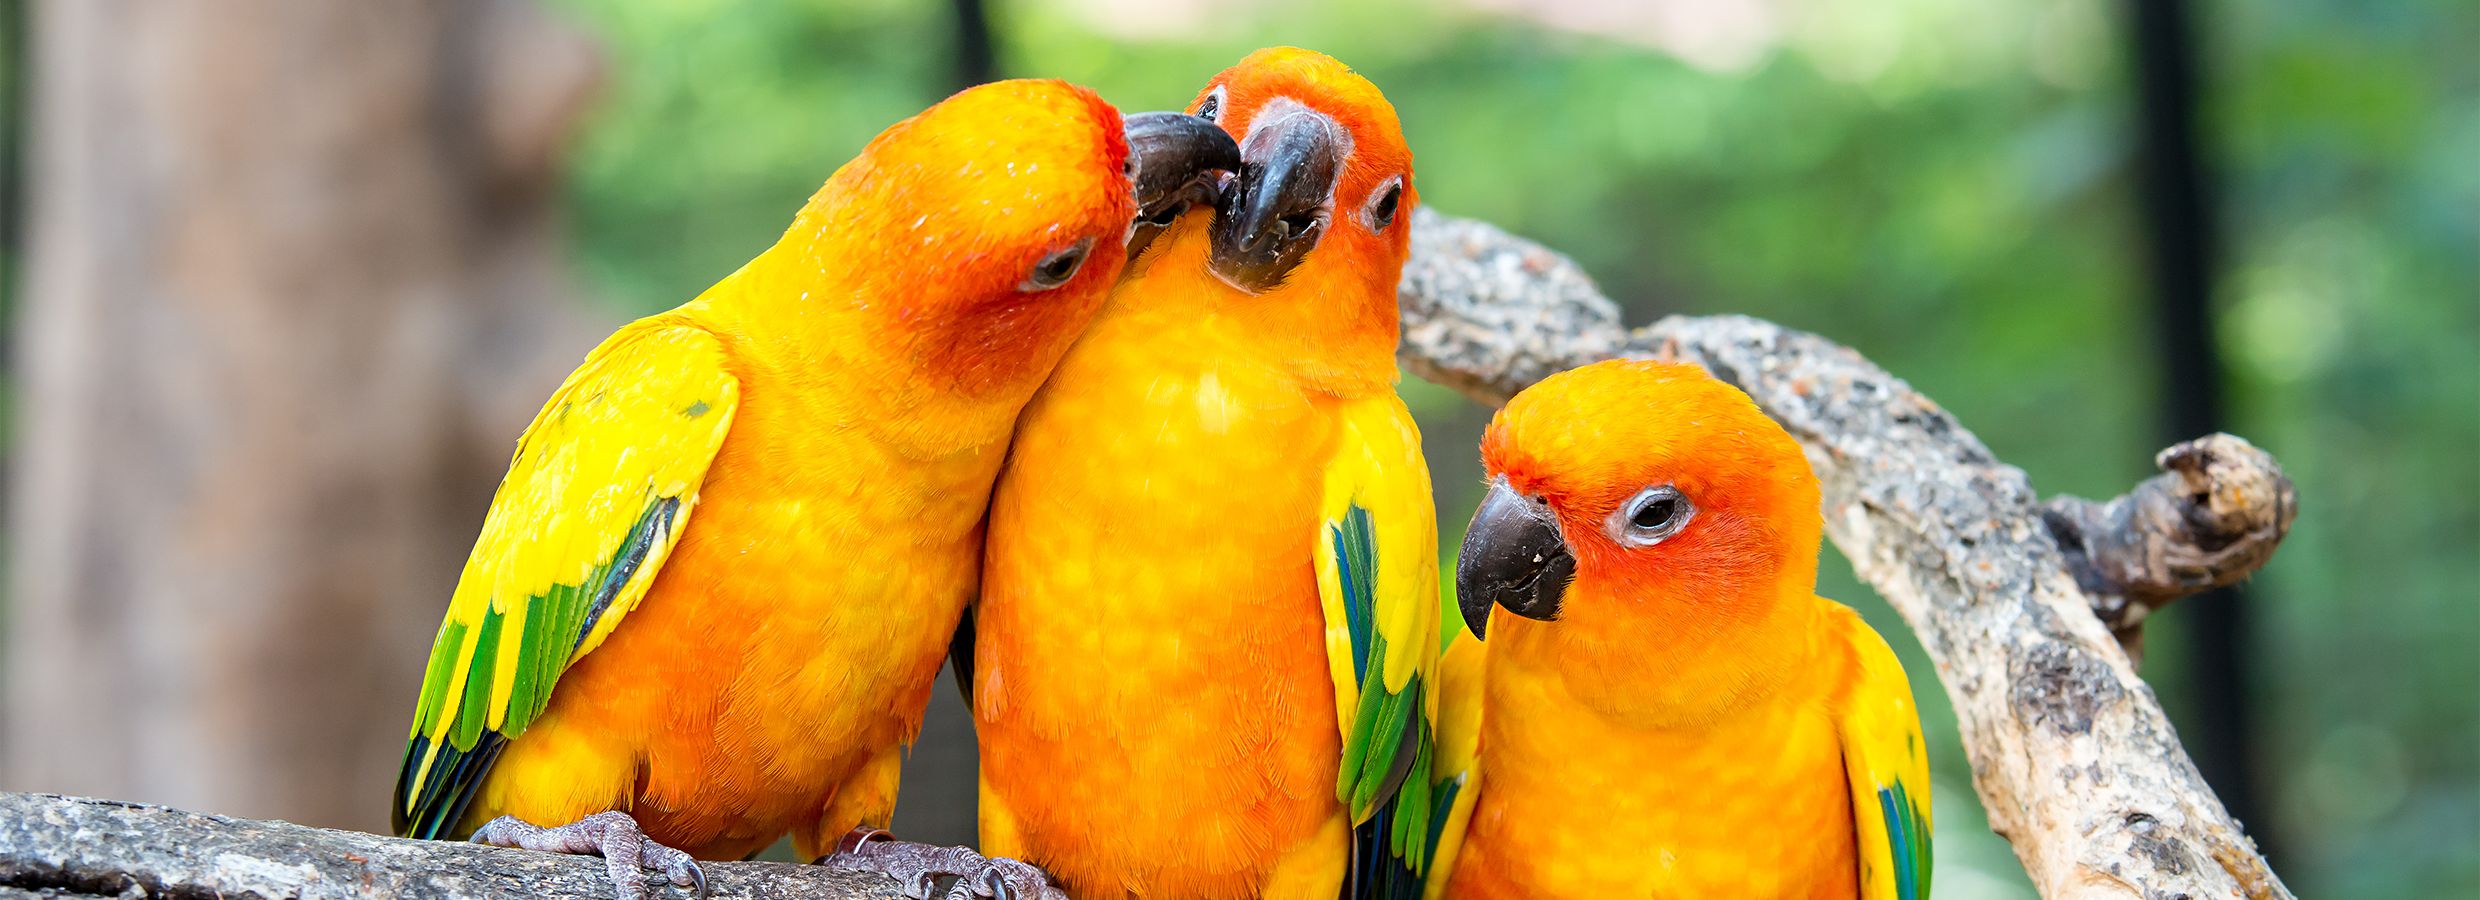 all types of pet birds